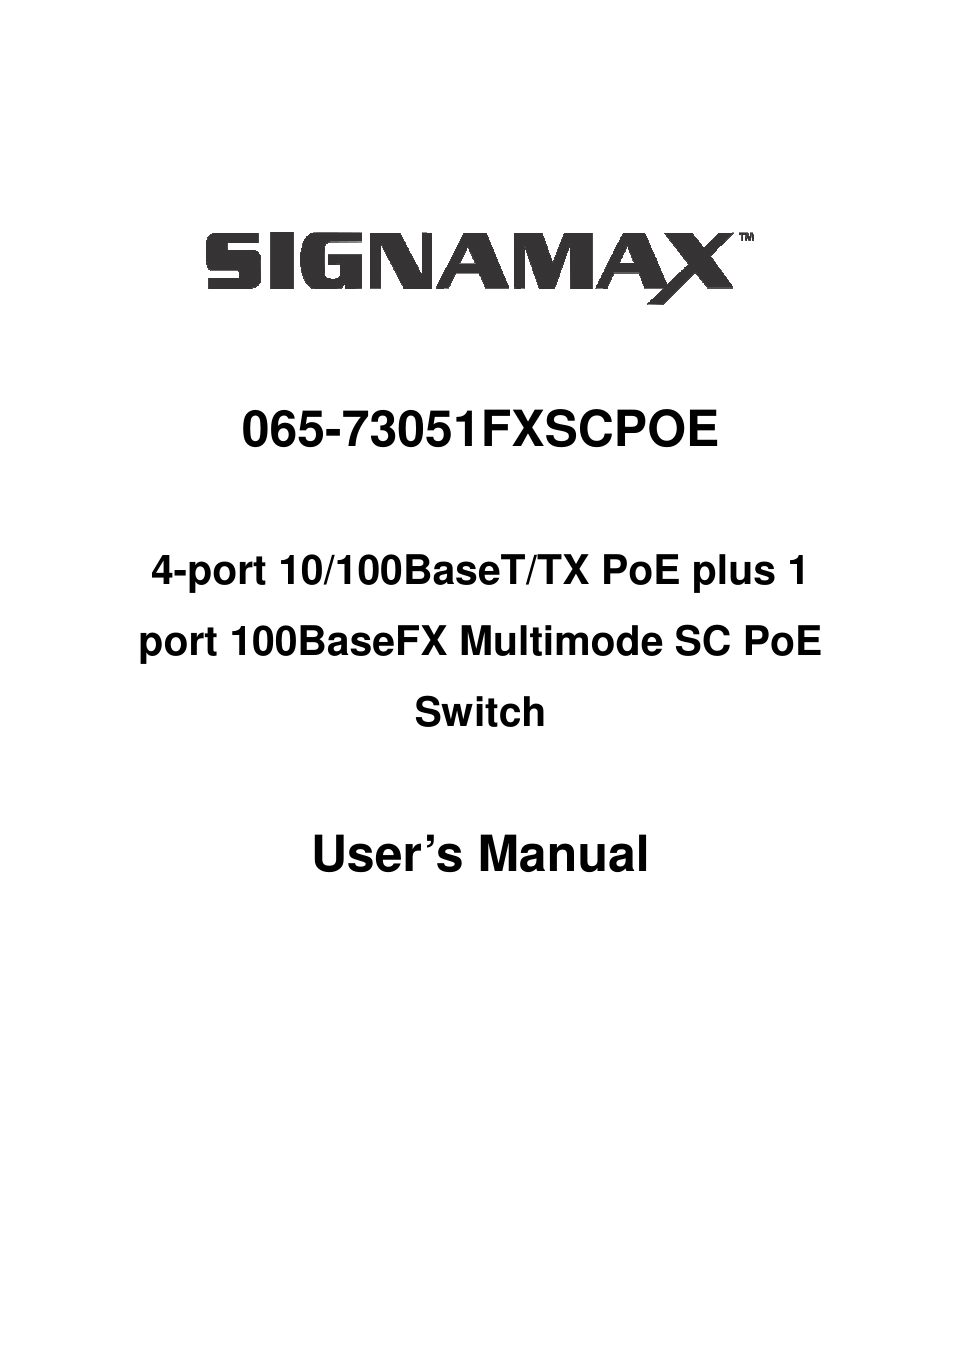 5-Port 10/100BaseT/TX PoE Switch with 4 PoE Ports & 1 100BaseFX Port